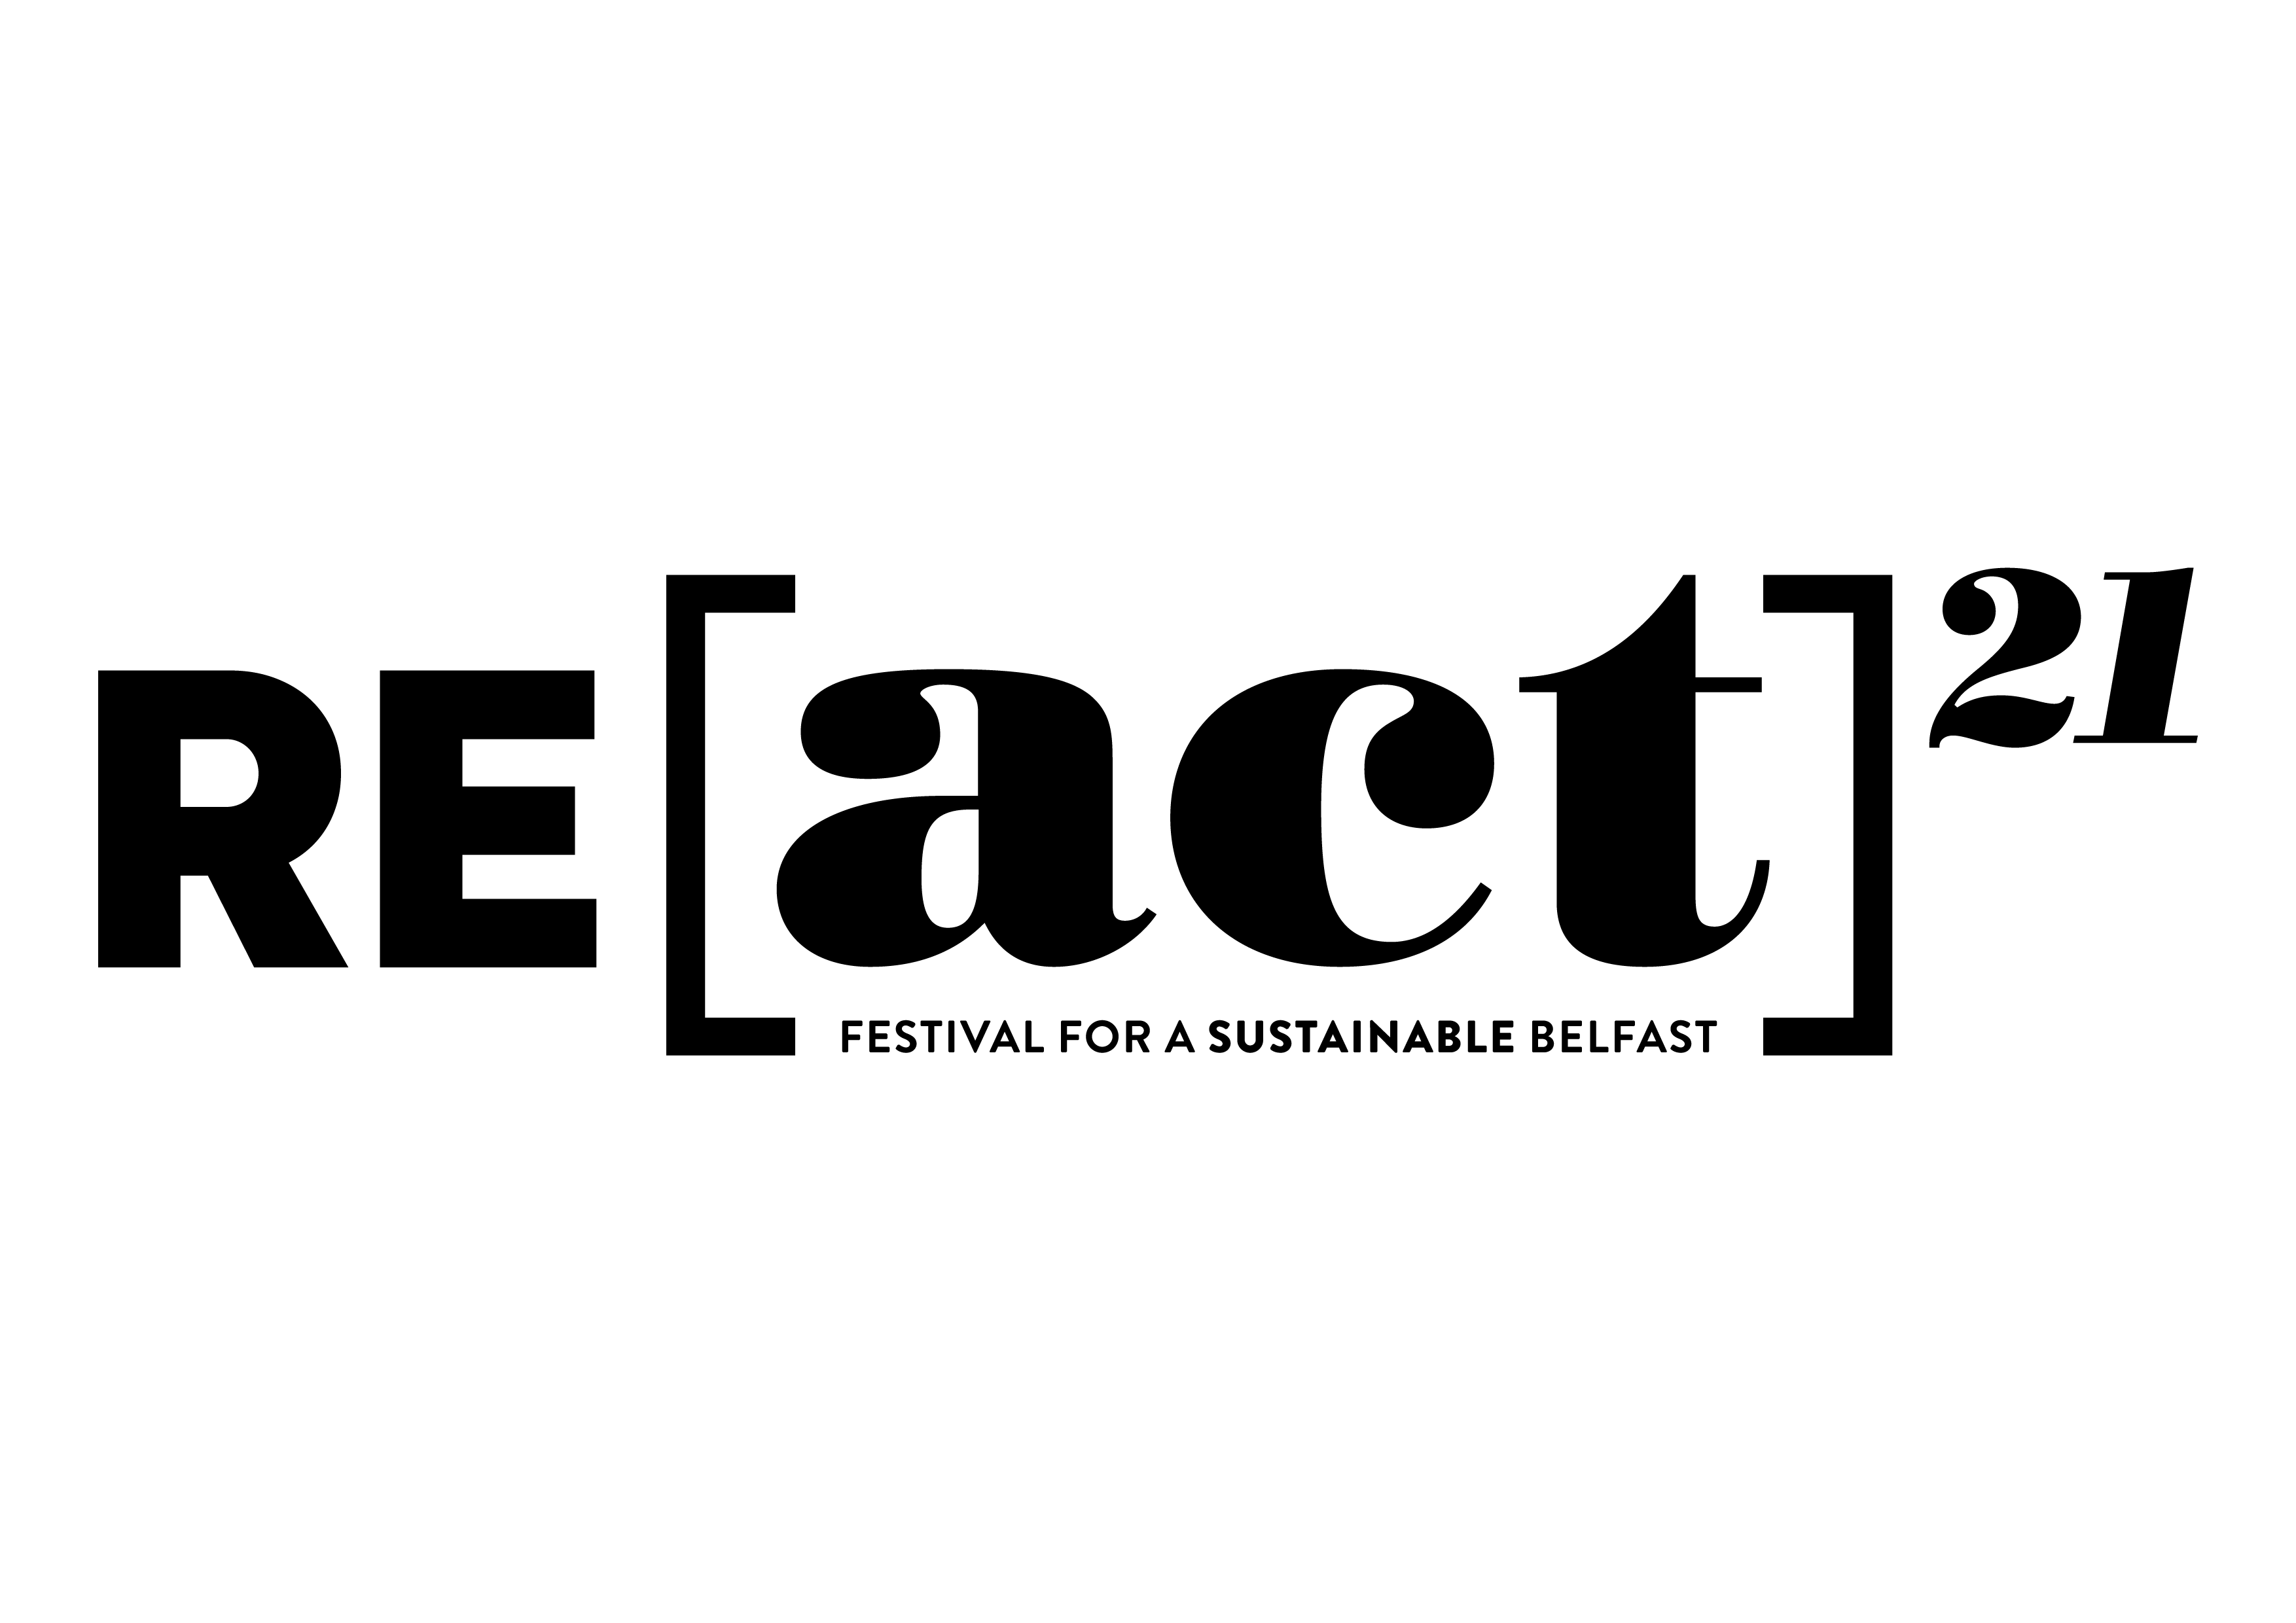 REact Logo Date Strapline Black